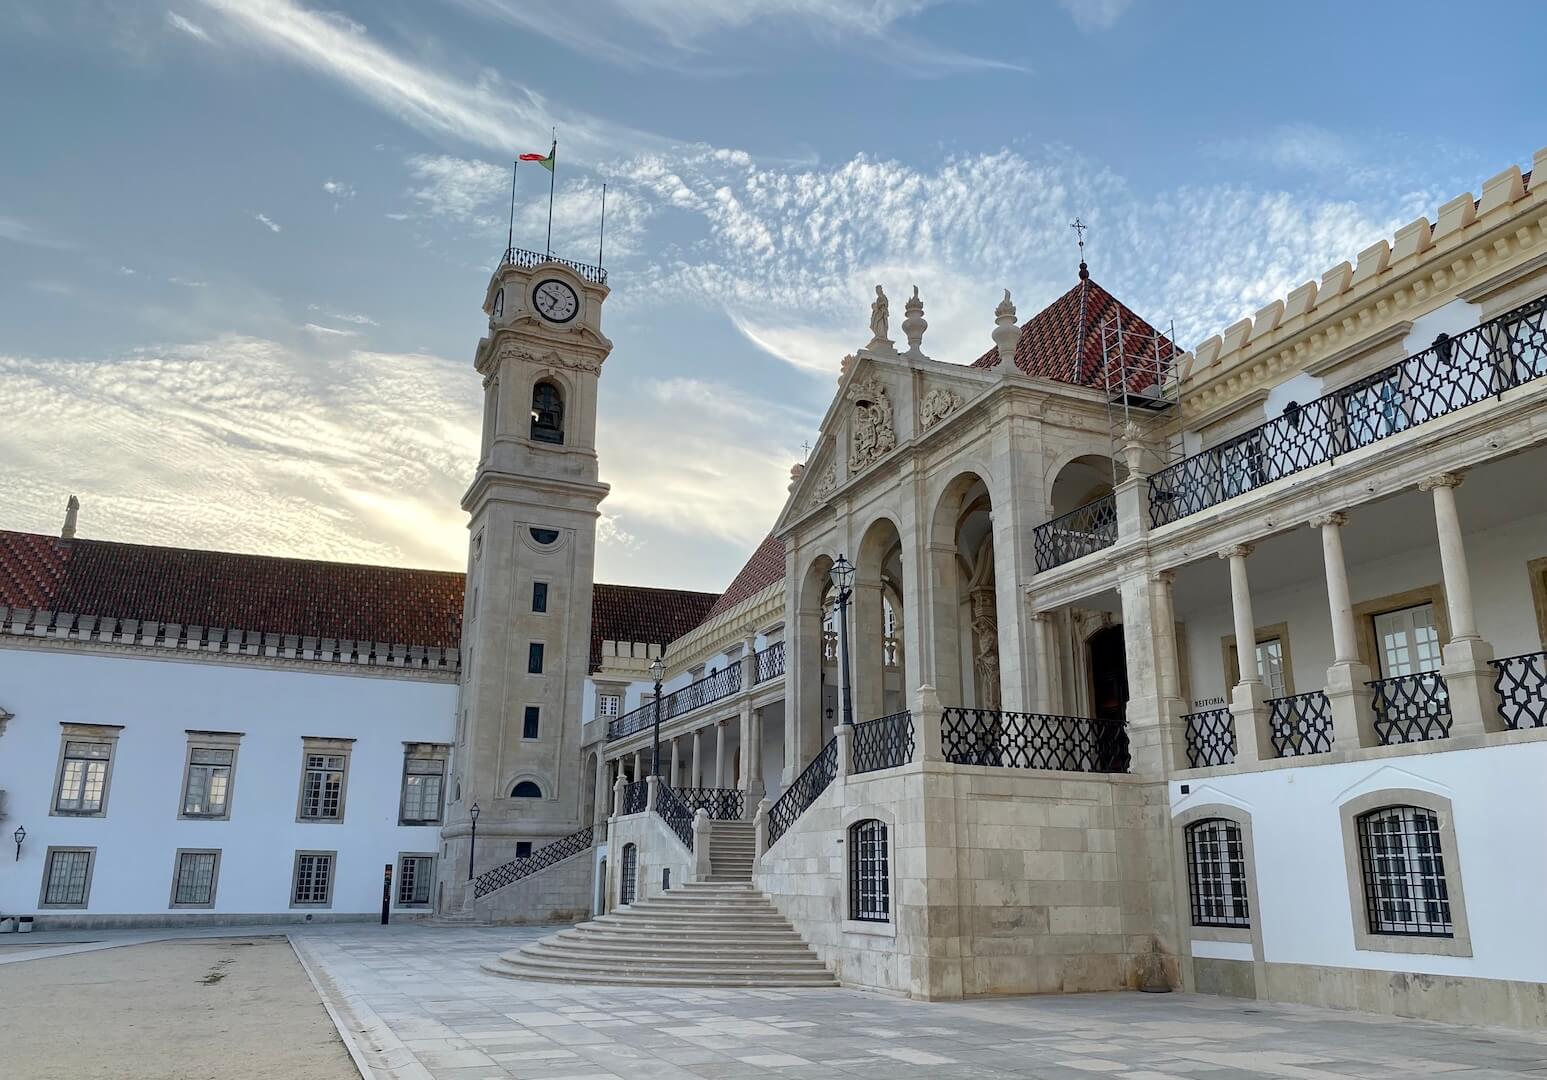 Touring Coimbra's famous university